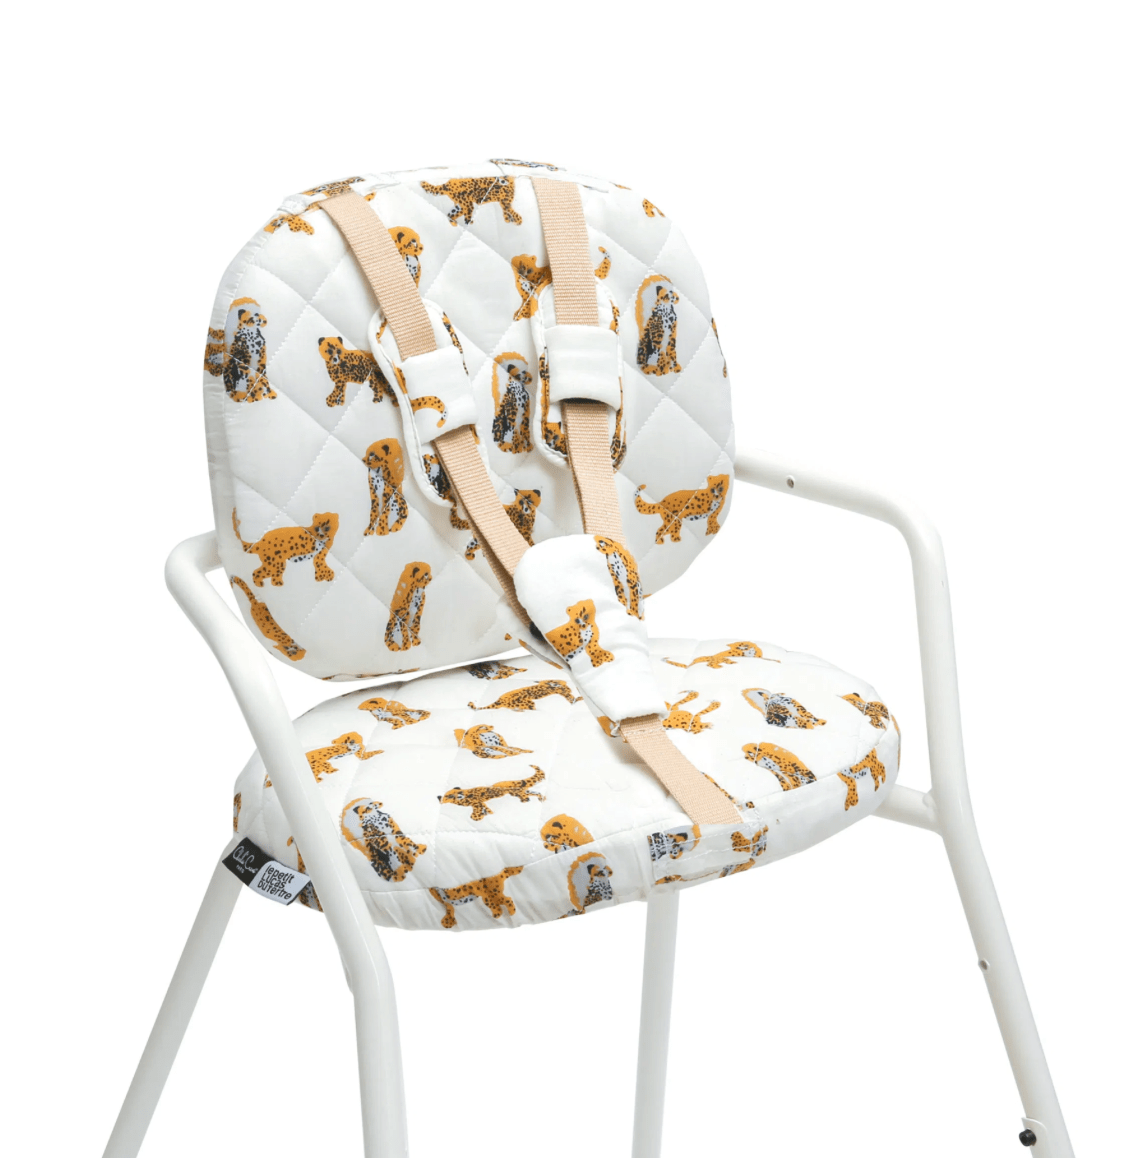 Charlie Crane TIBU High Chair Cushions, en del av kategorien Textiles - At Home Interiør